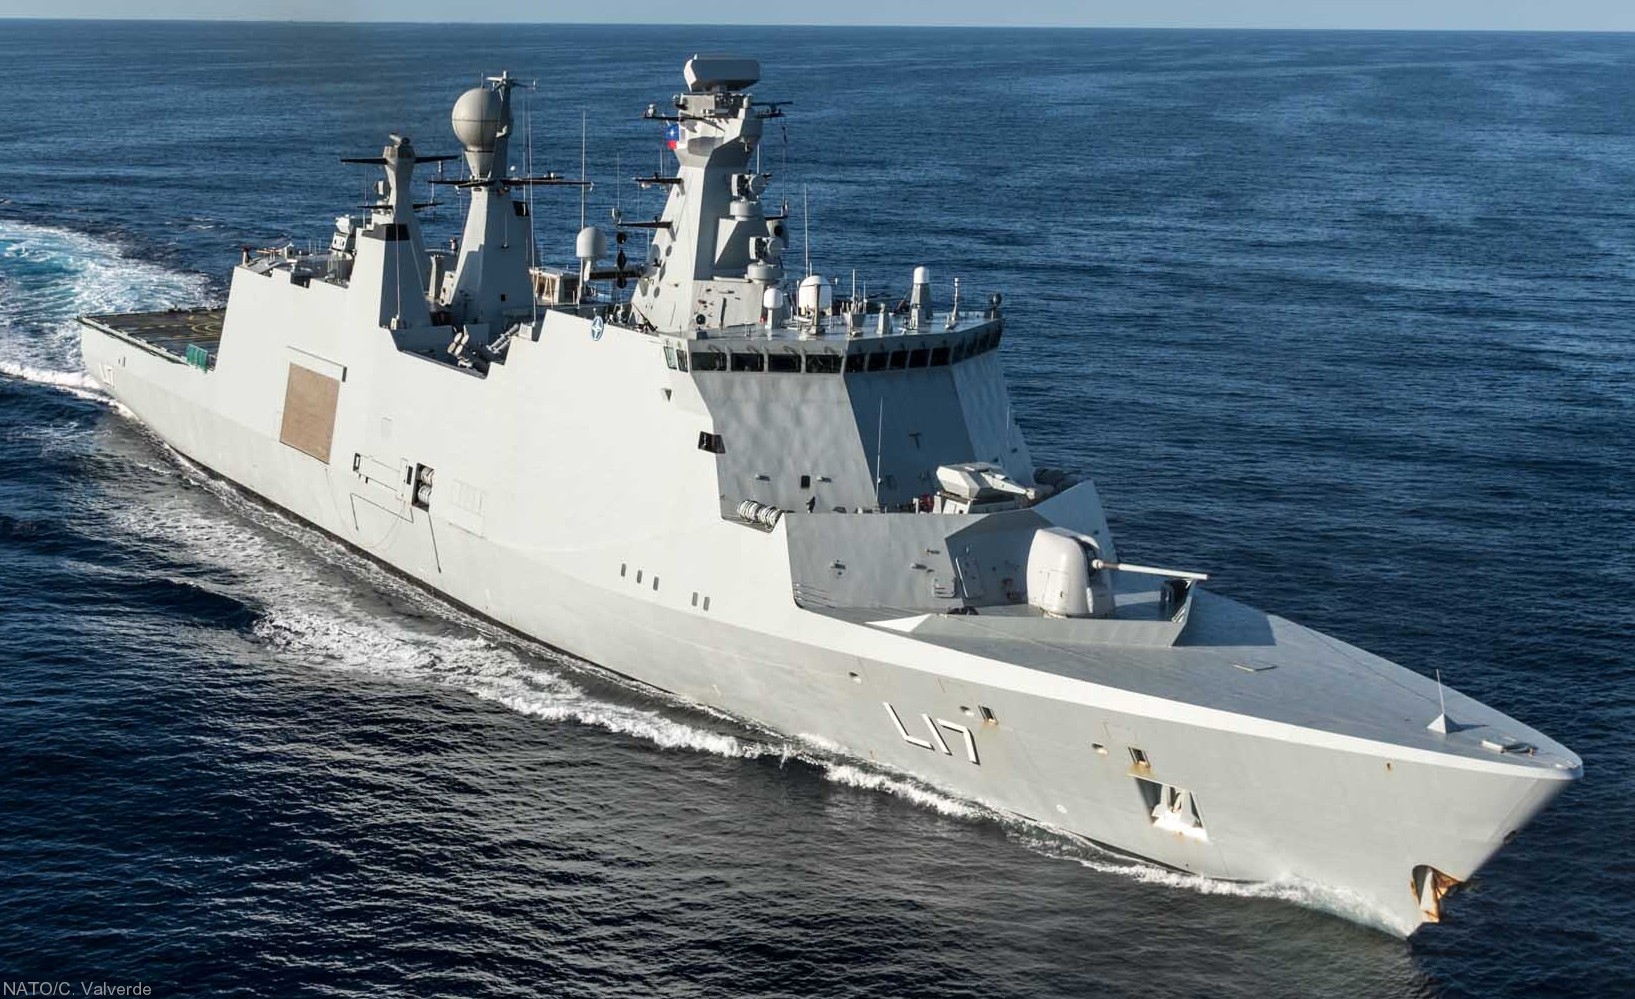 f-342 hdms esbern snare l-17 frigate command support ship royal danish navy 90